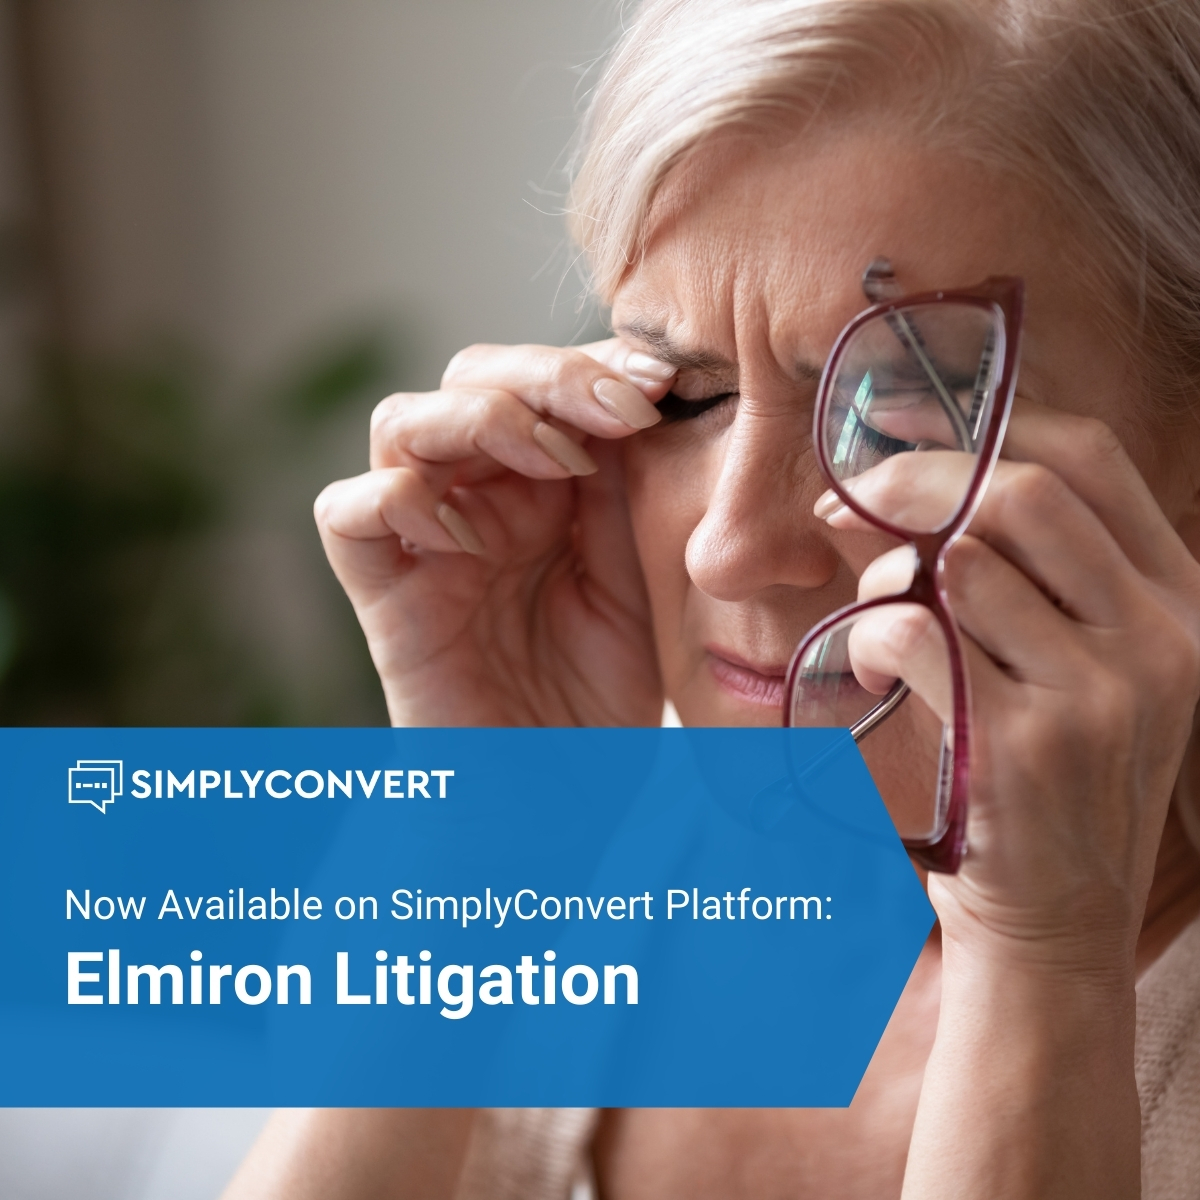 Elmiron Litigation